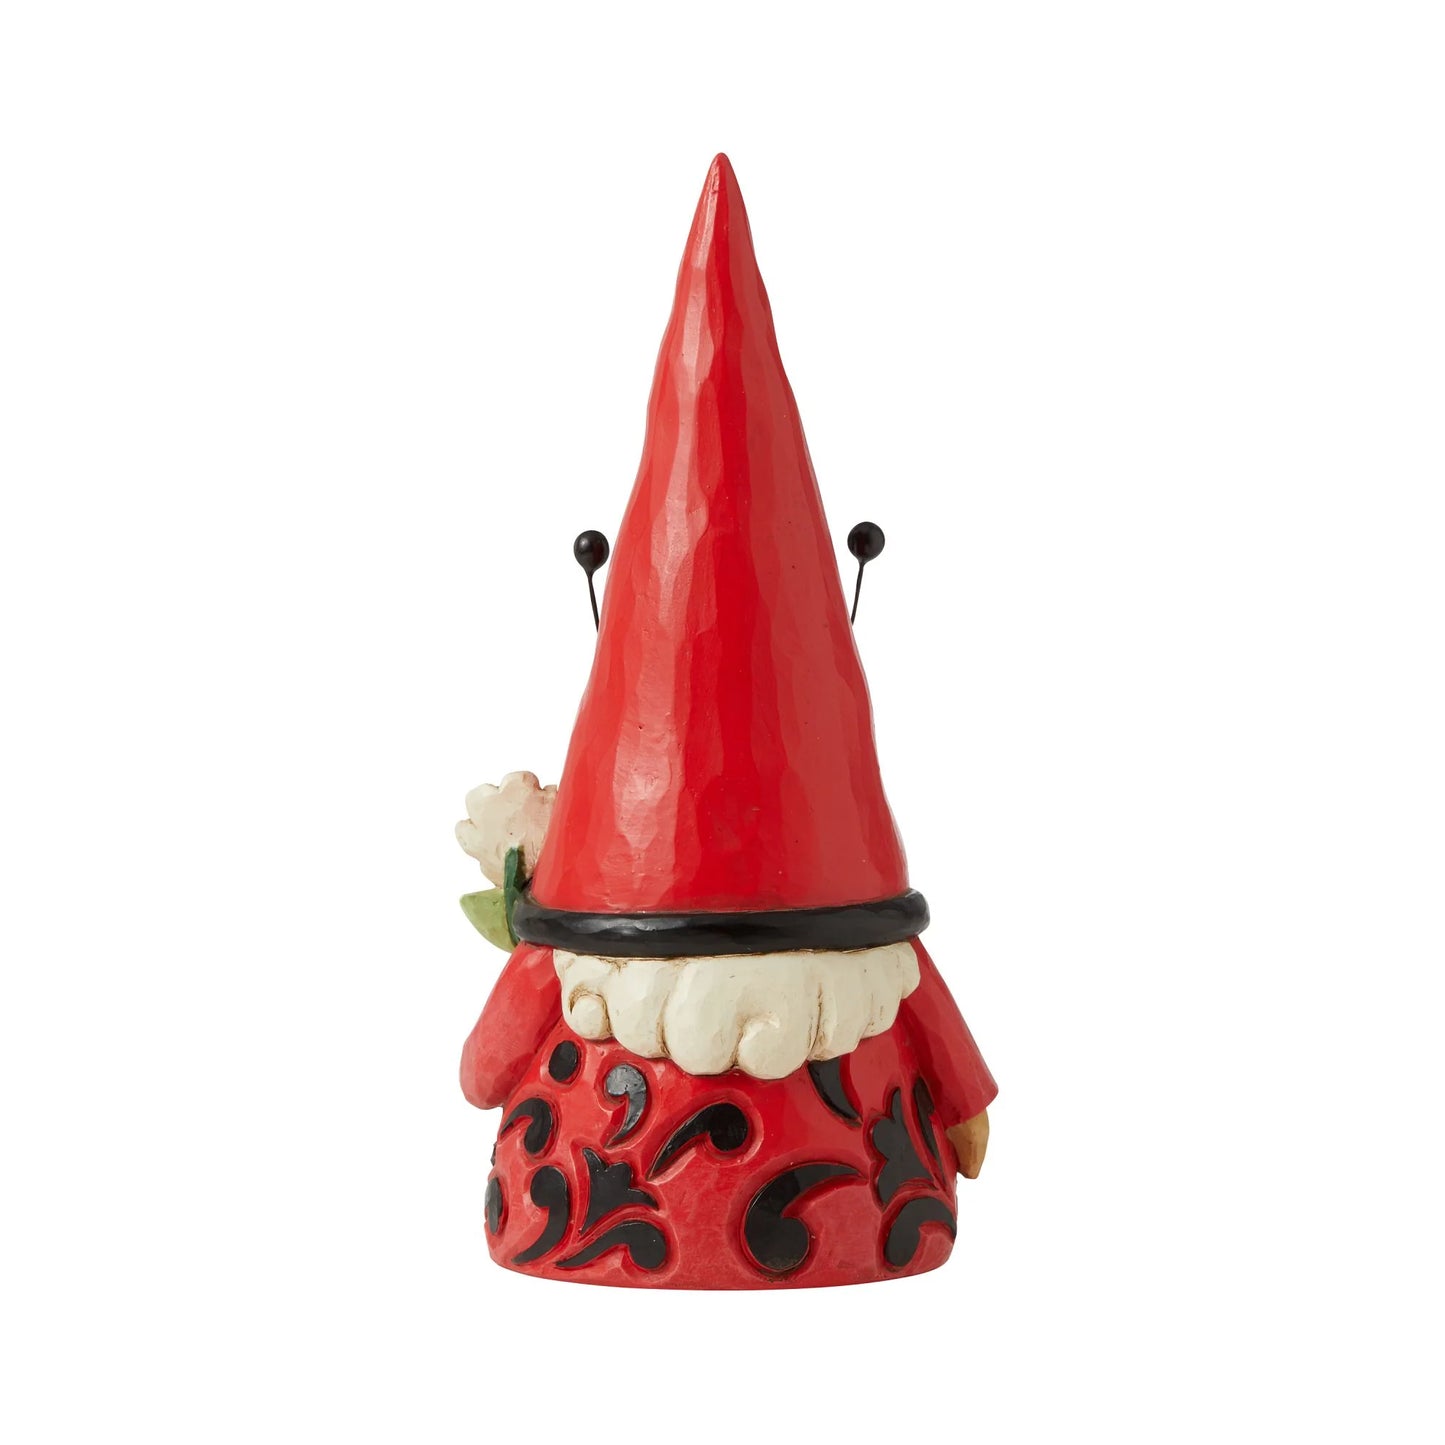 Cute As A Bug - Ladybug Gnome Figurine